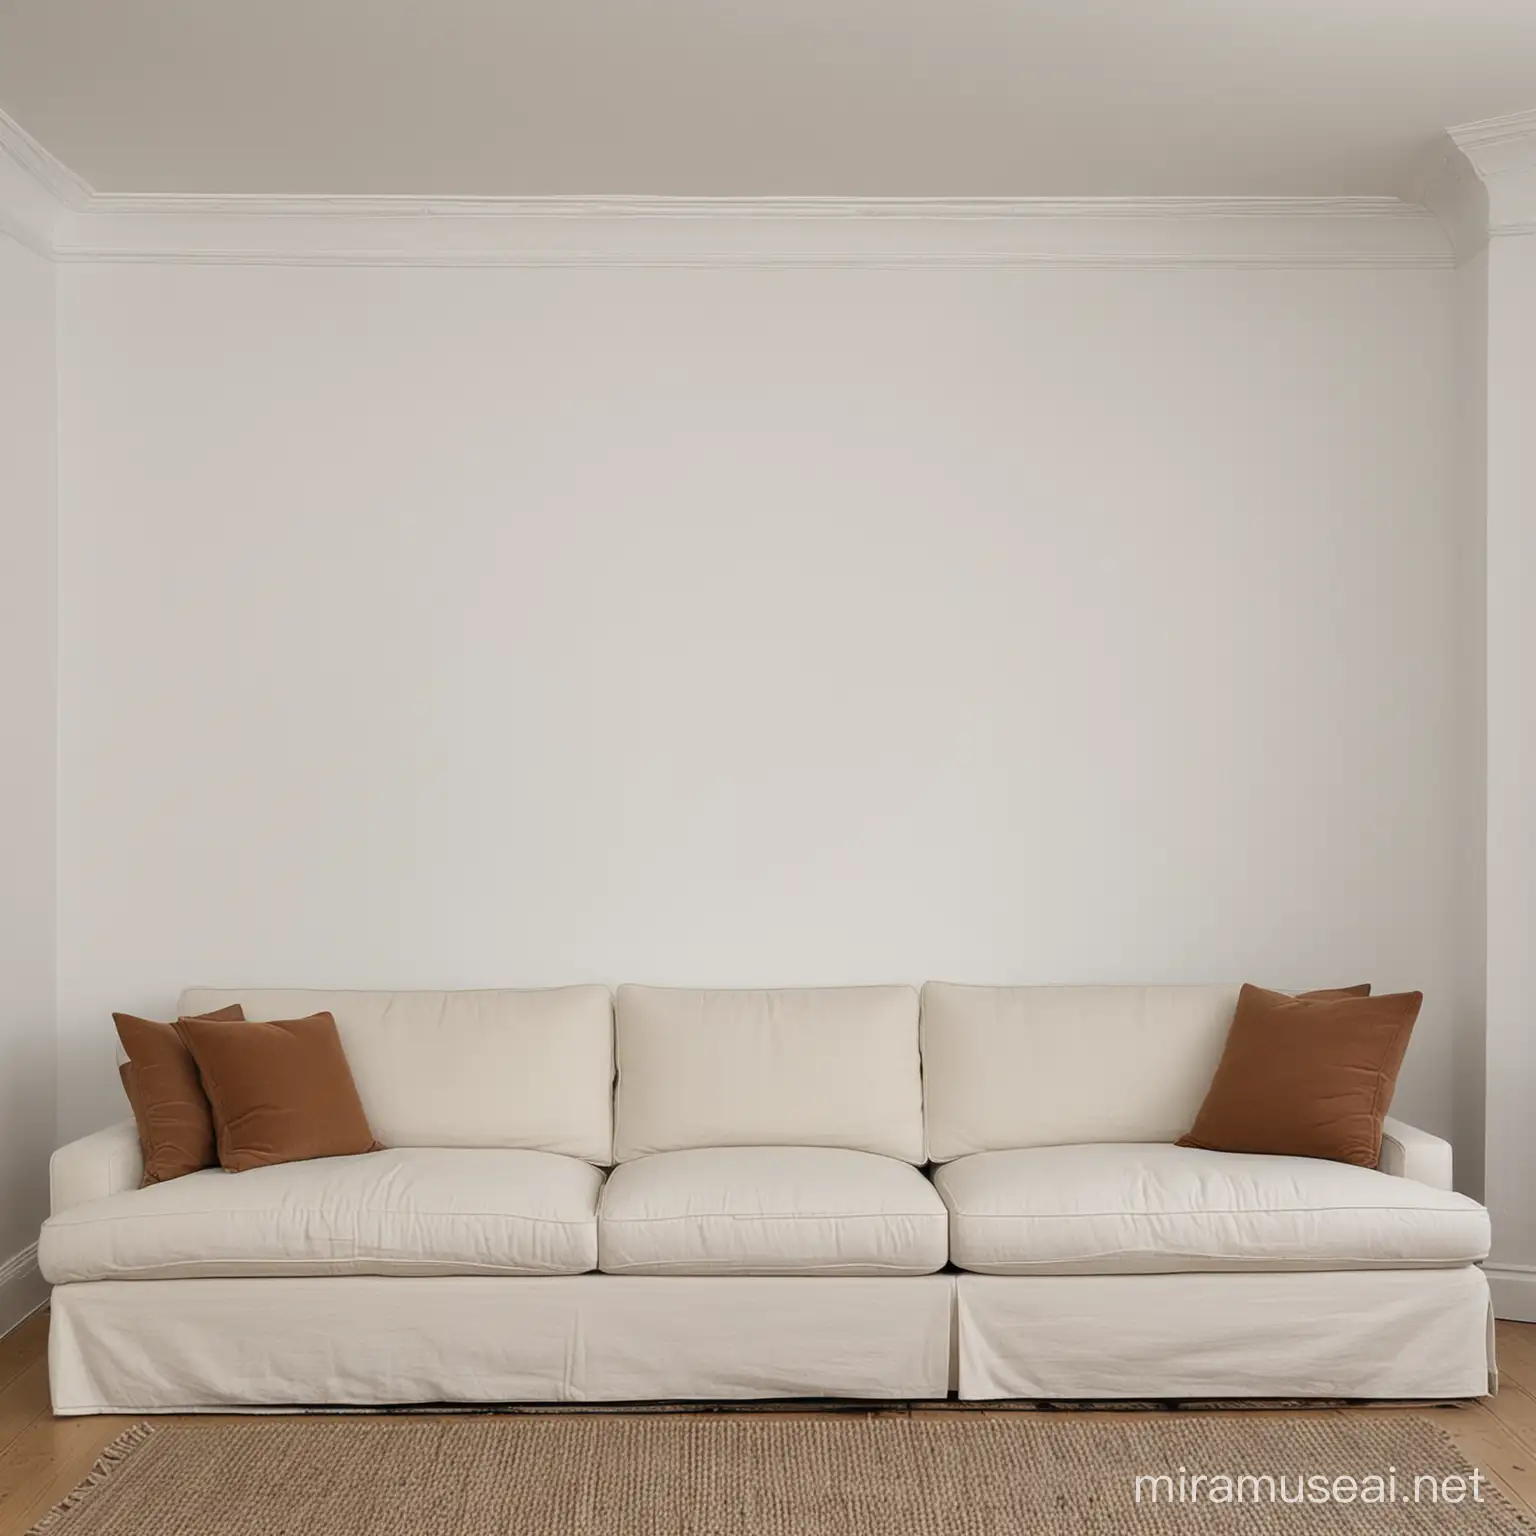 Cozy Living Room Interior with Neutral Decor